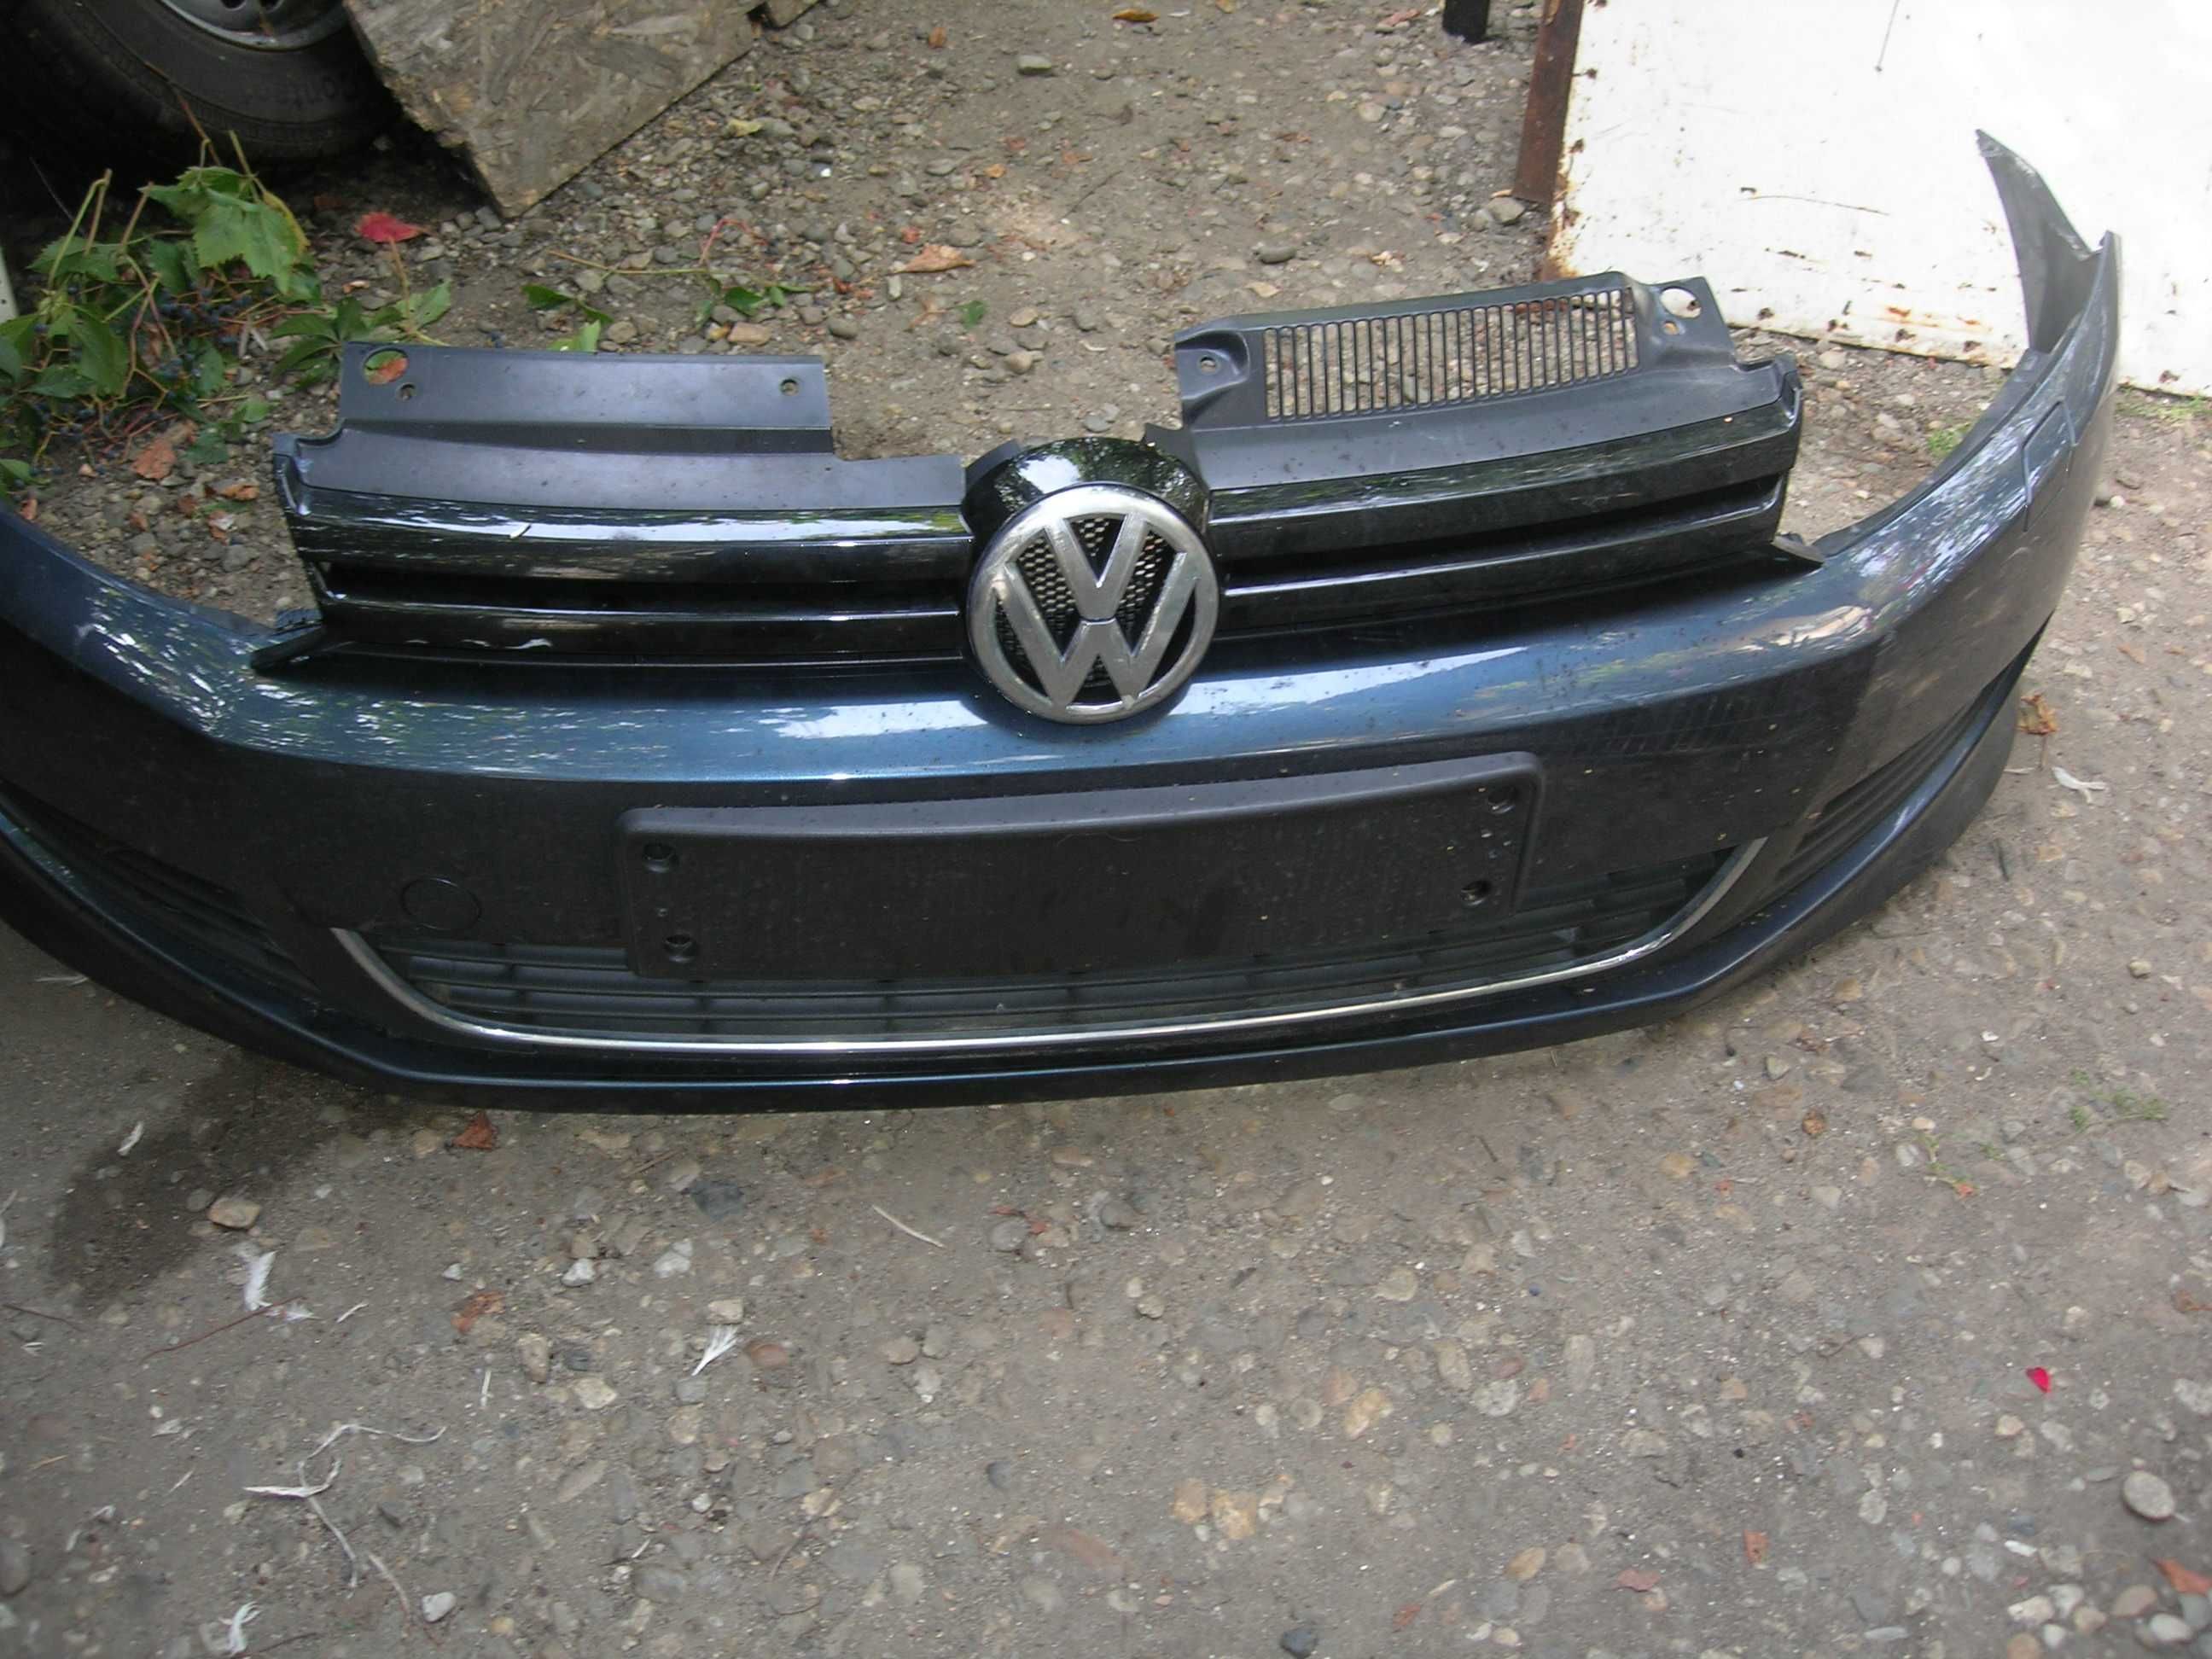 Bara fata, tragar, radiator AC  VW Golf 6, 1.6TDI, an 2013